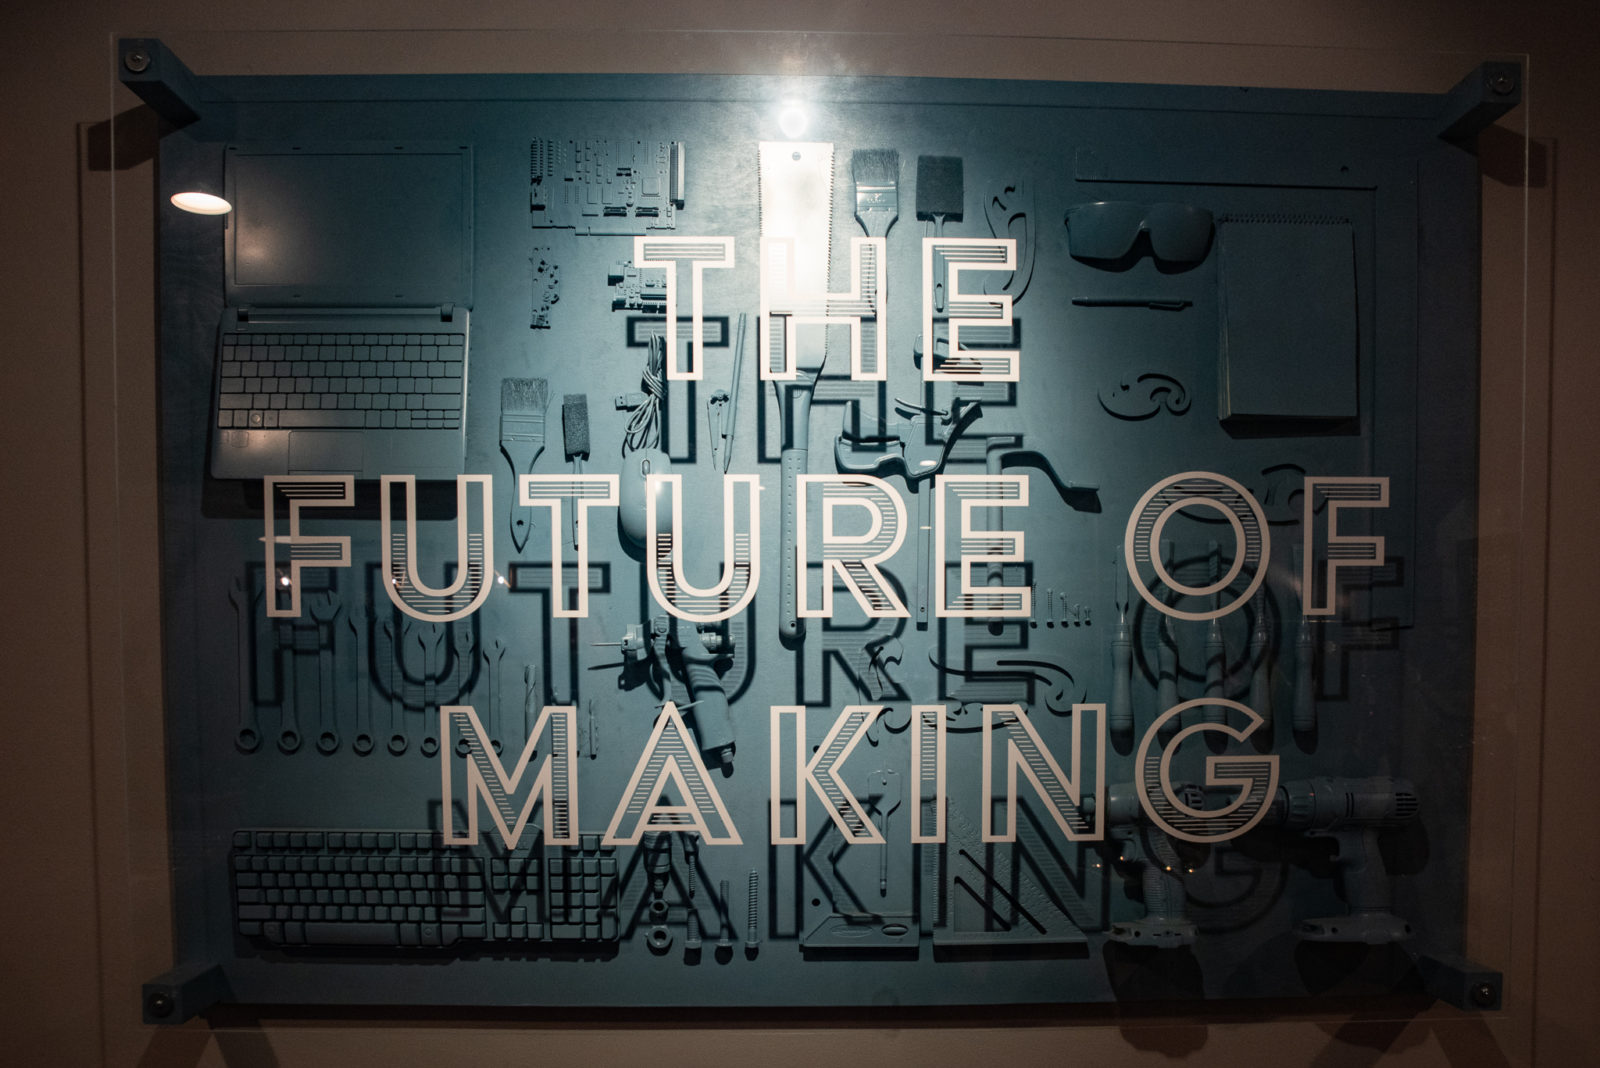 nextfab - the future of making